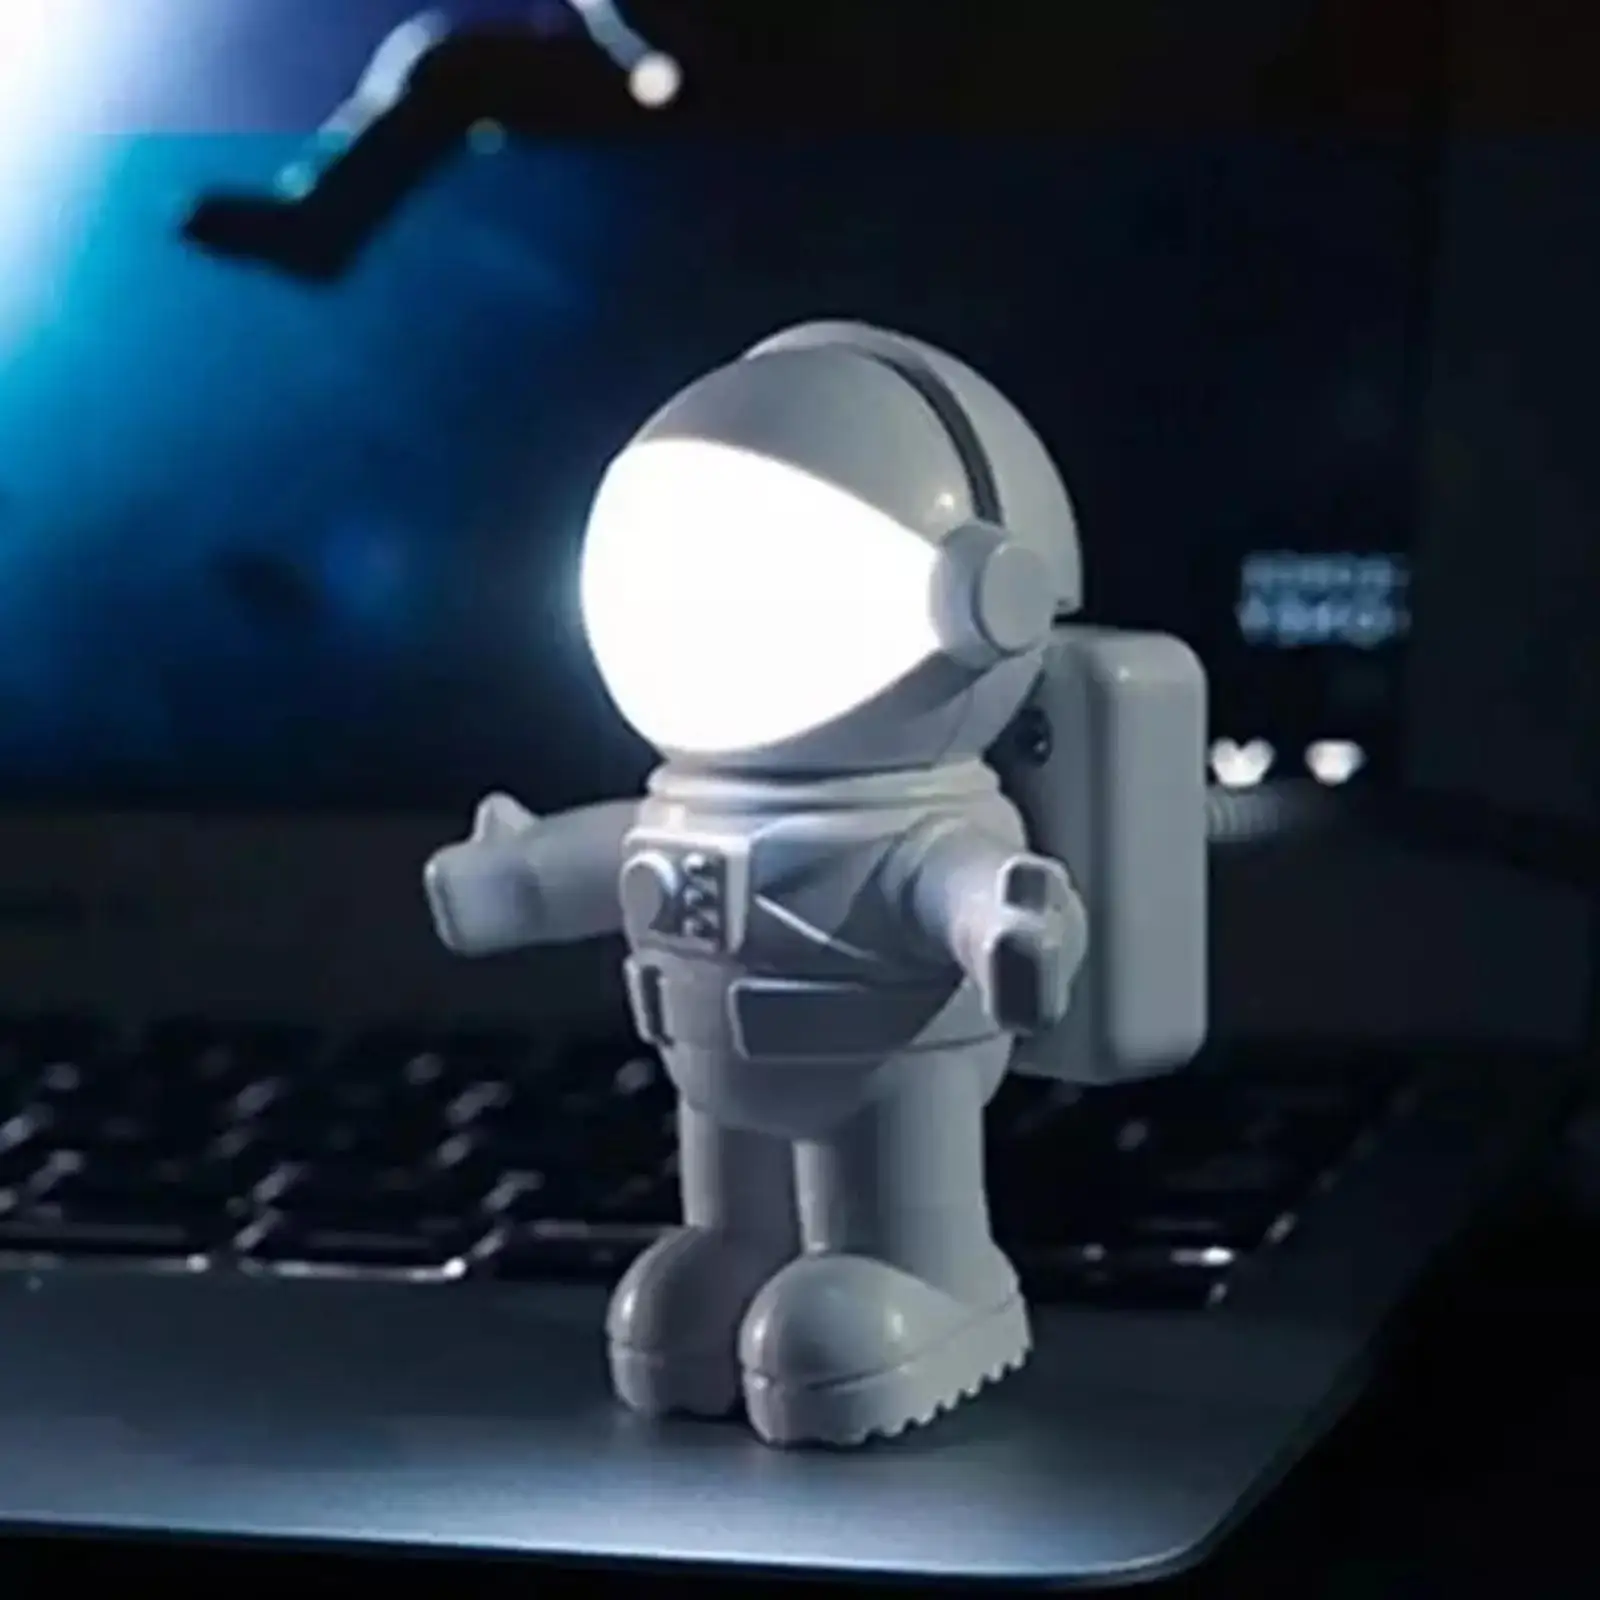 

Funny Astronaut USB Gadget Spaceman USB LED Light Adjustable Night Light Gadgets For Computer PC Lamp Room Decor Nightlight R8Z6